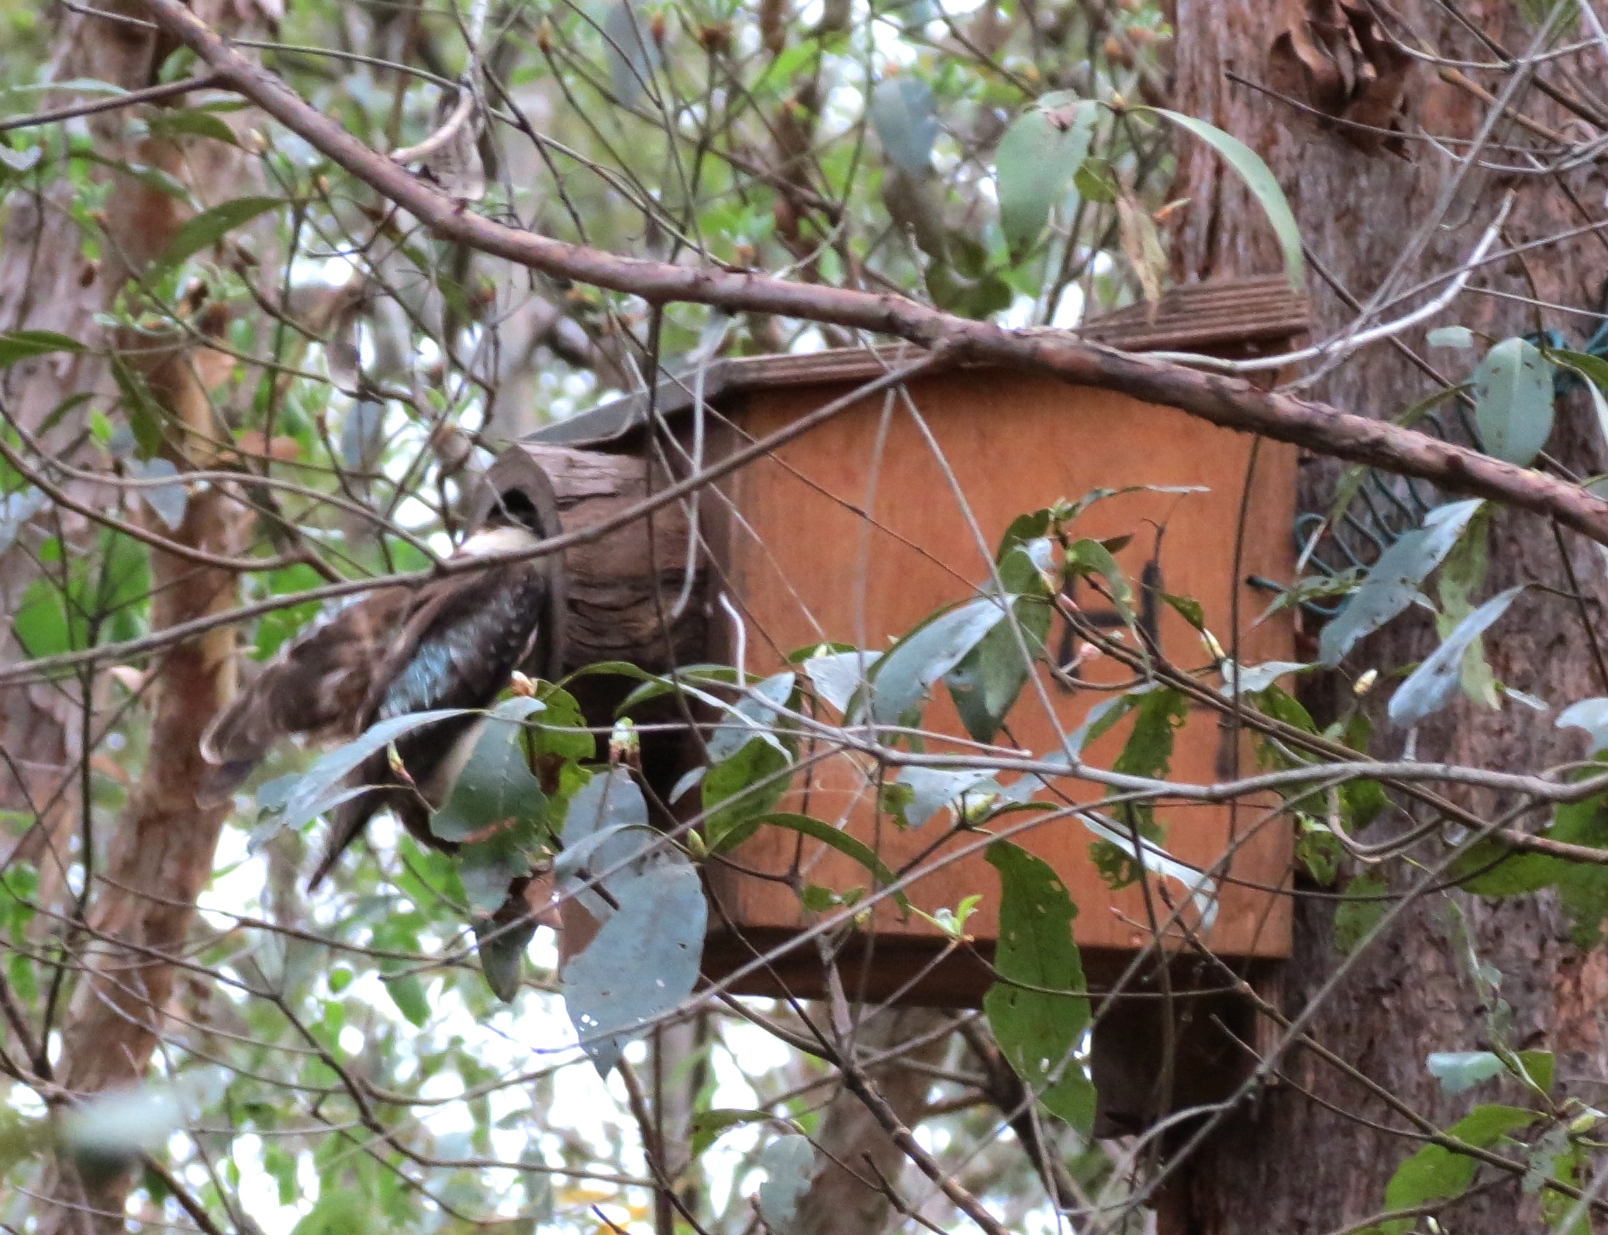 Kookaburra feeding chicks - 25 Dec 2013